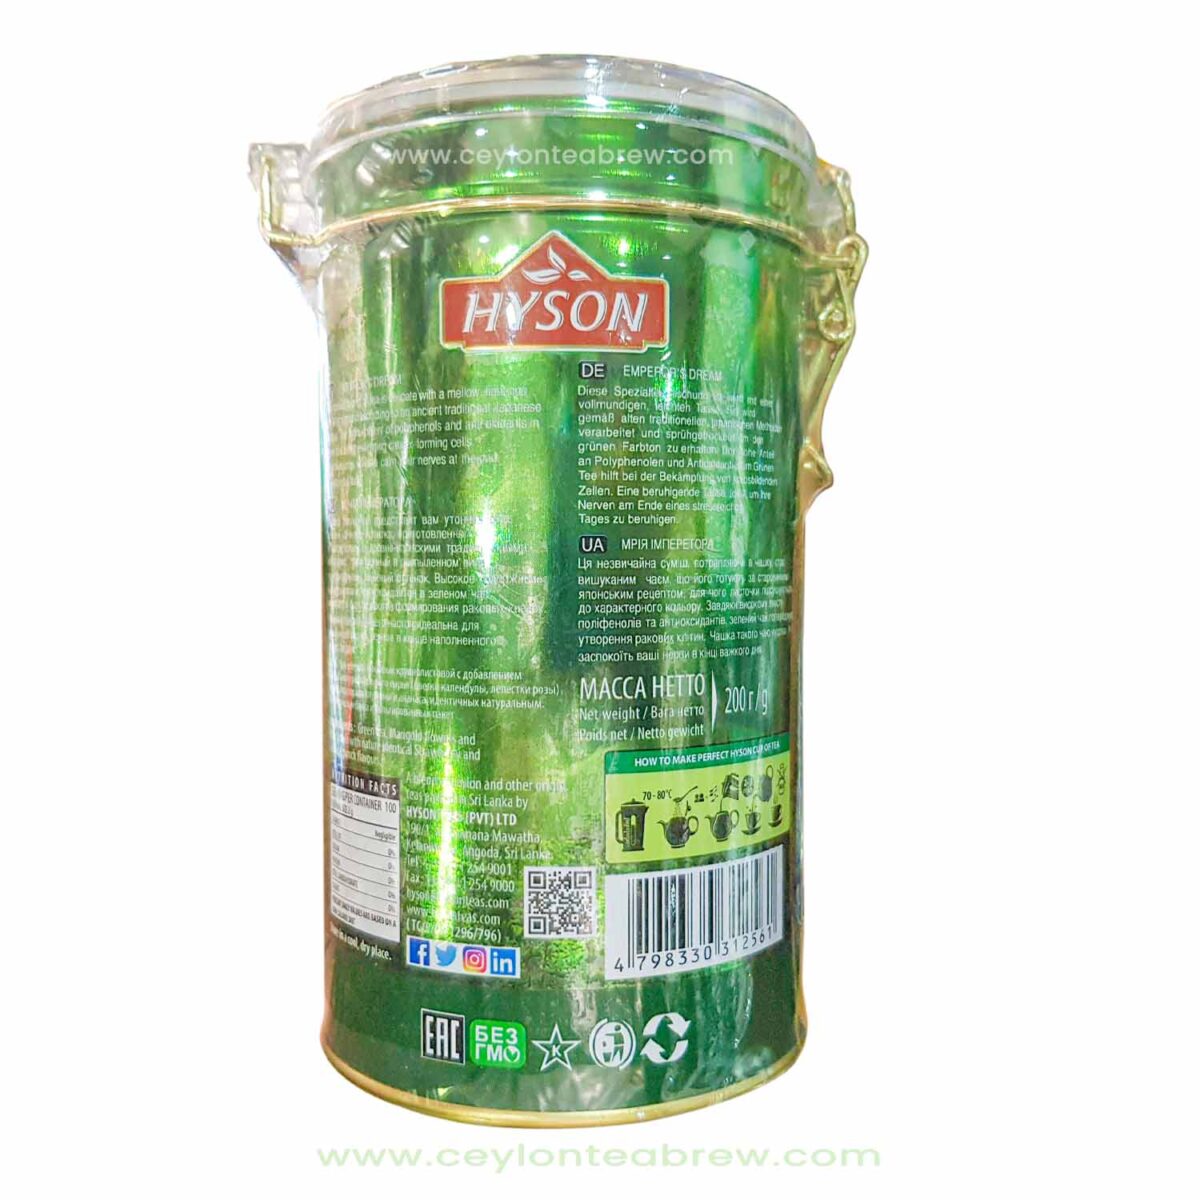 Hyson Ceylon Pure green leaf tea 3